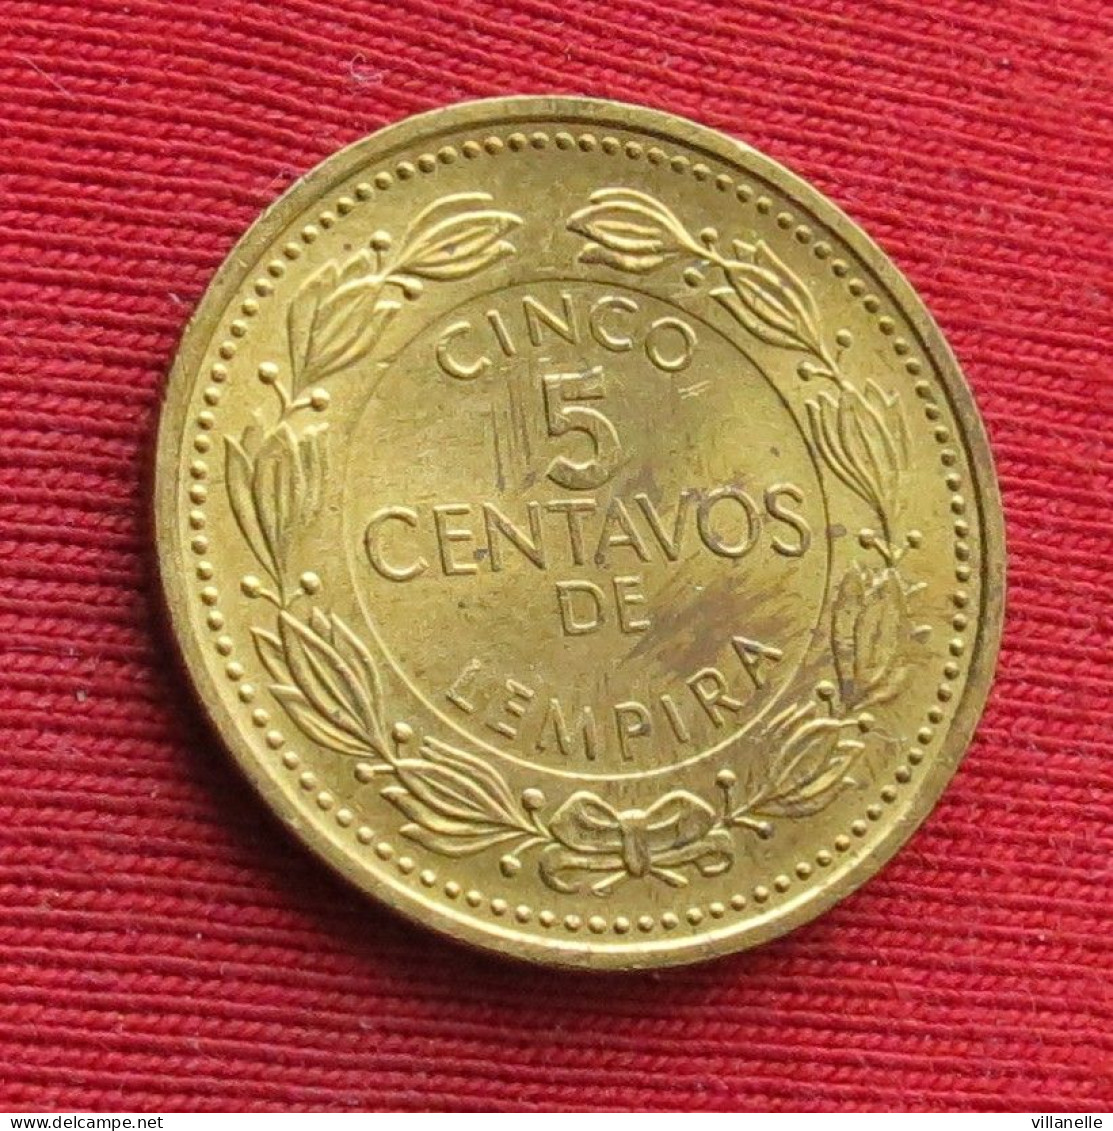 Honduras 5 Centavos 1998  W ºº - Honduras